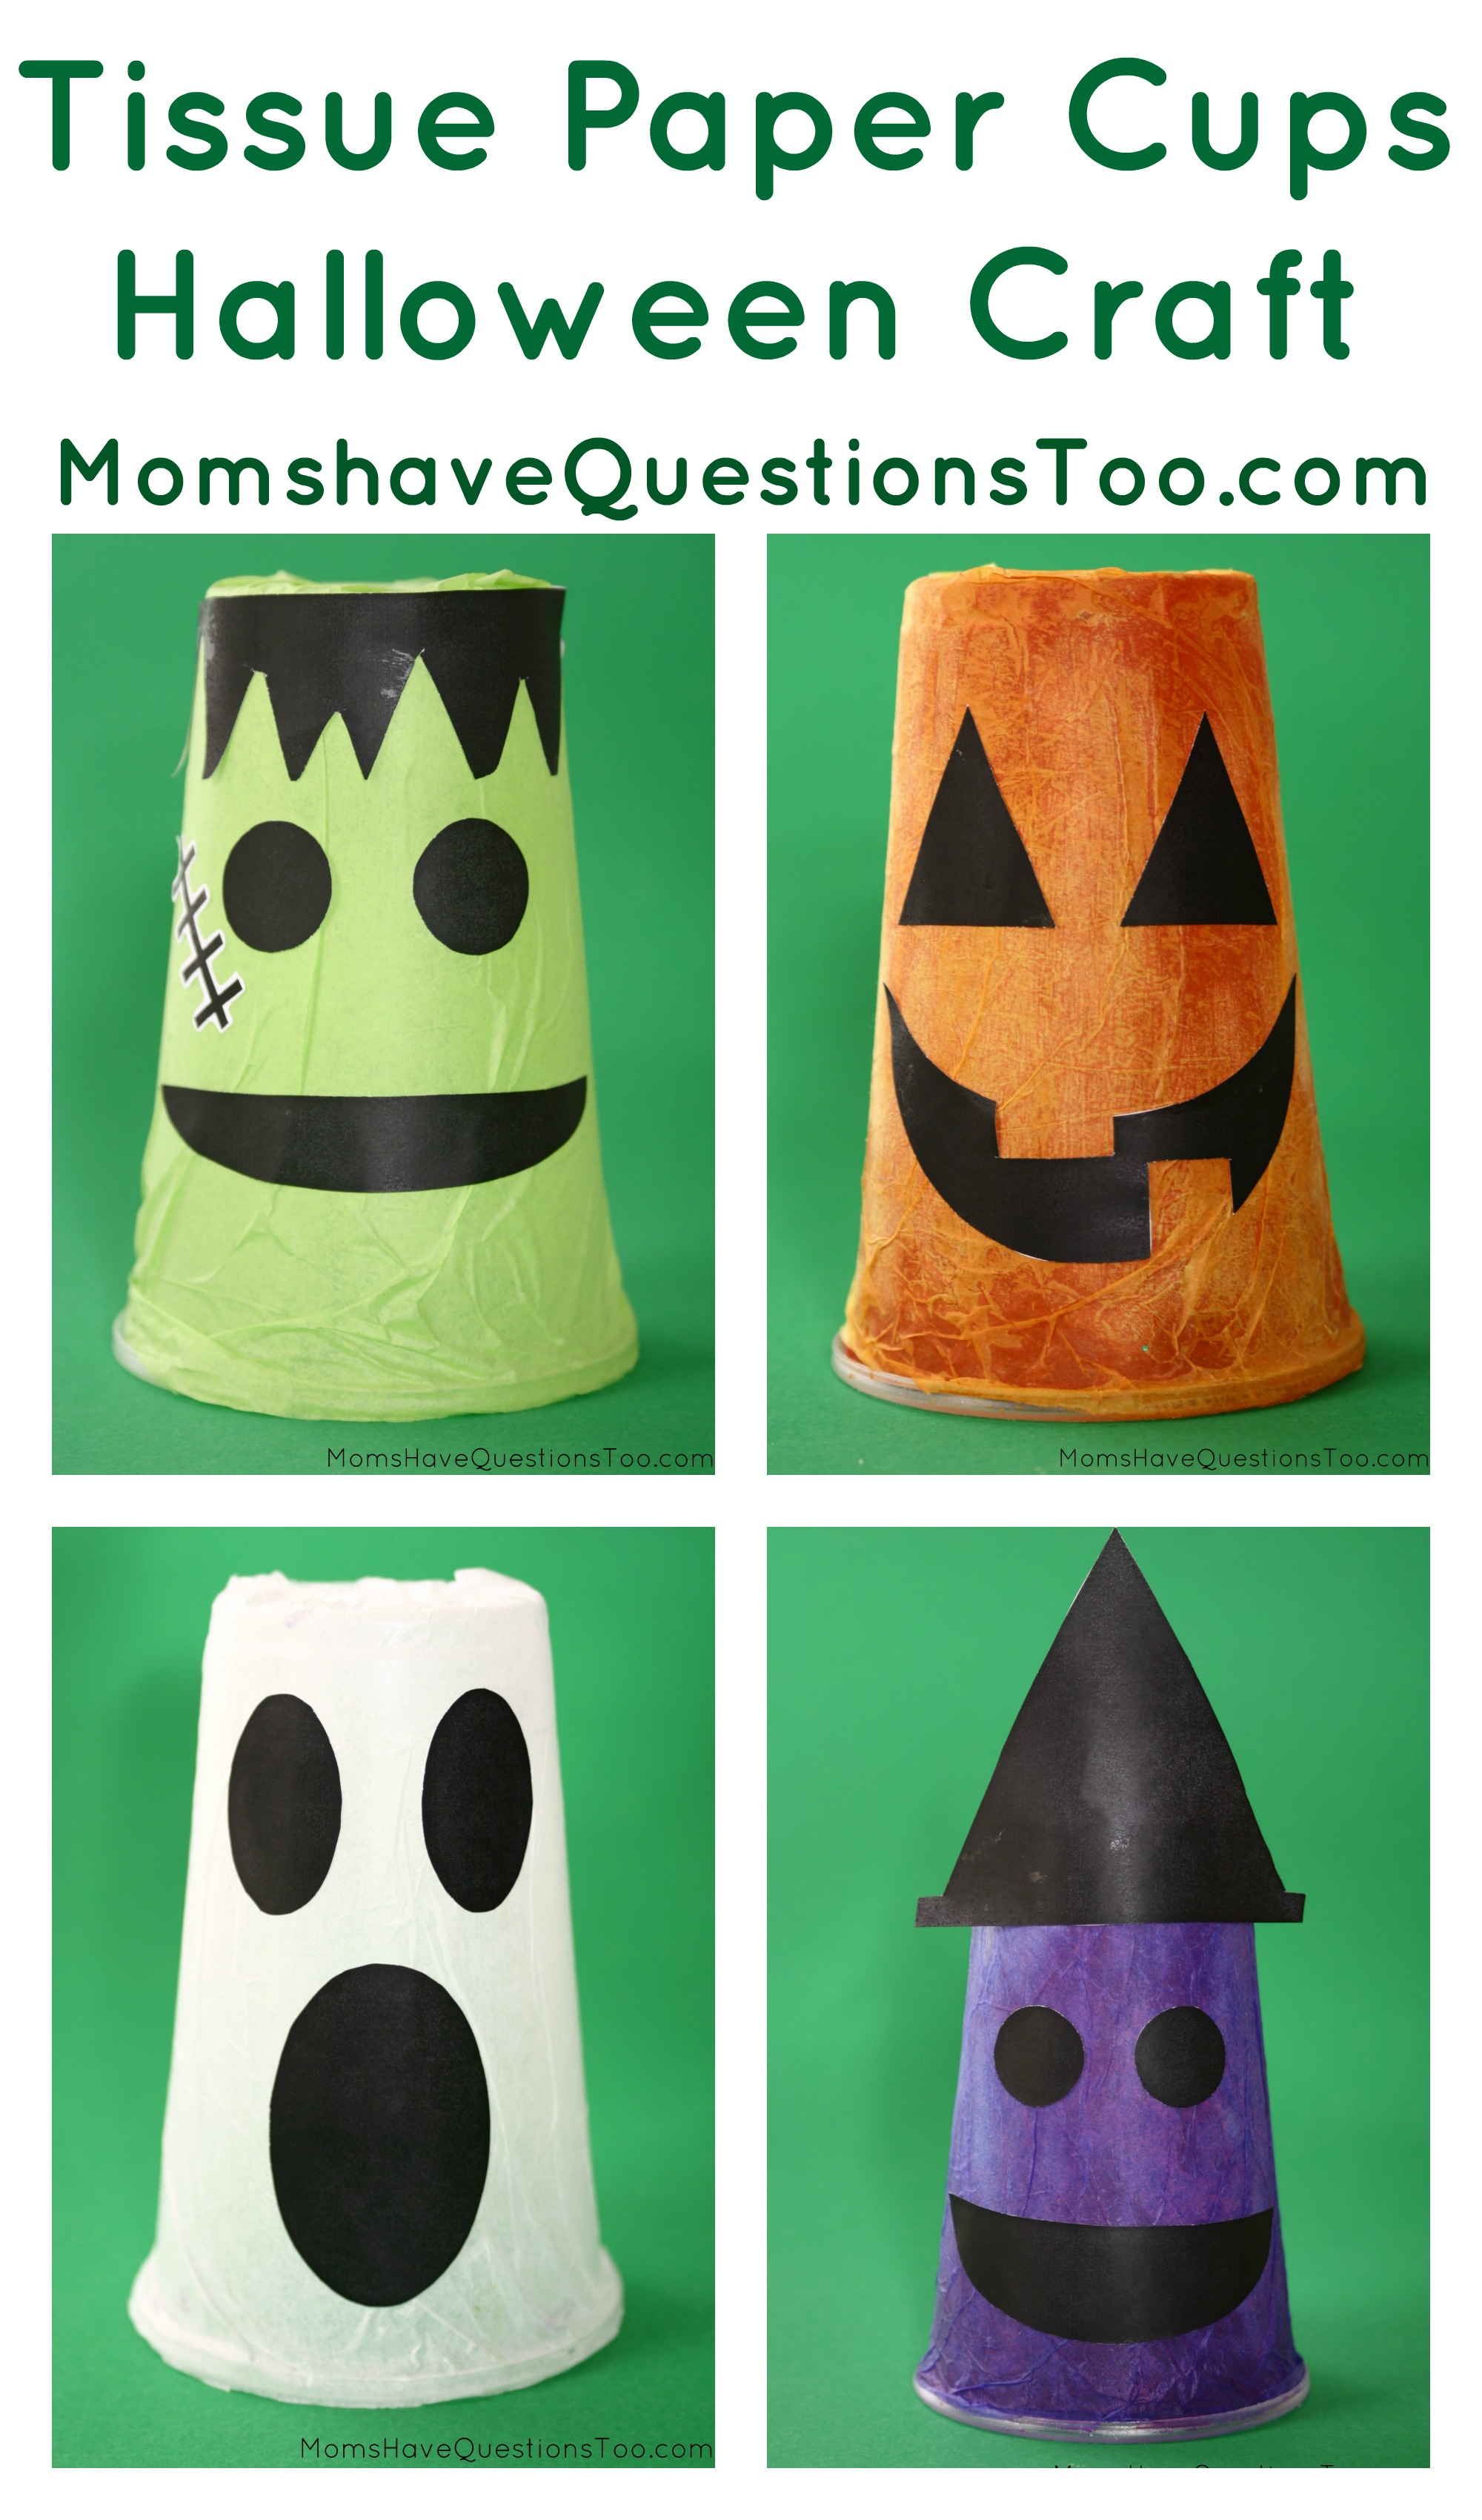 Tissue Paper Cups Halloween Craft